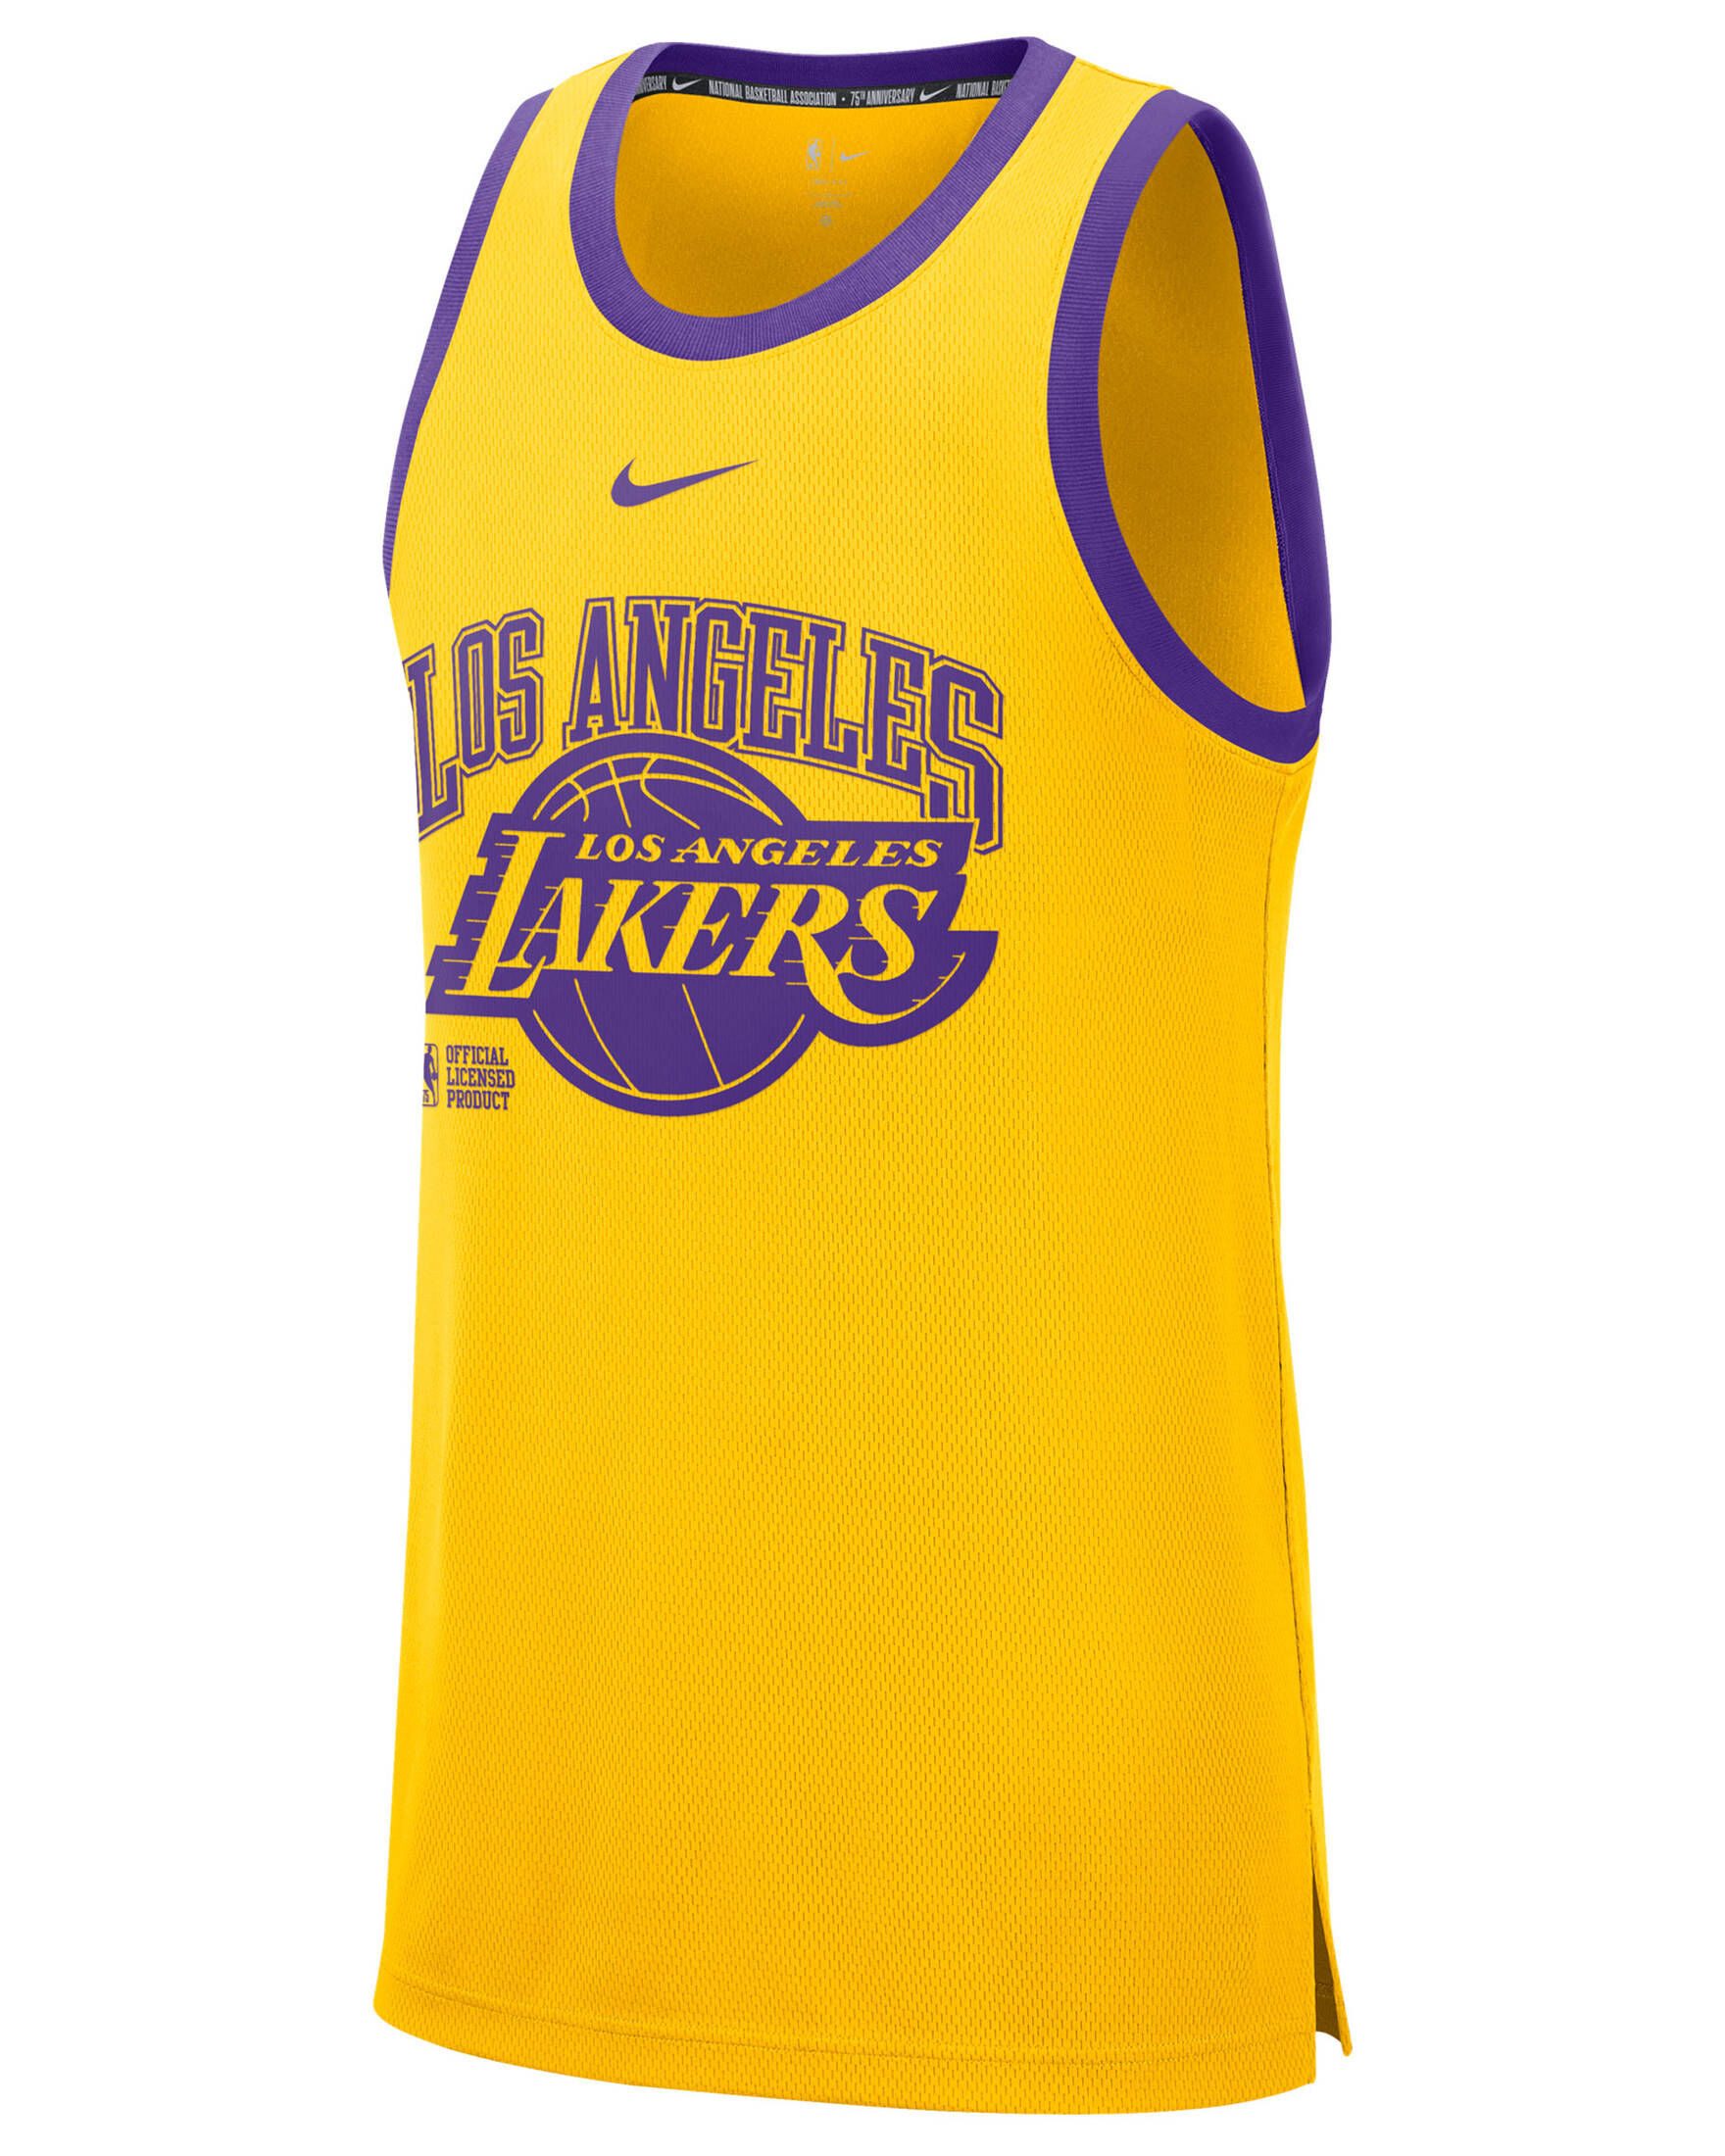 Nike Basketballtrikot Herren Trikot NBA LOS ANGELES LAKERS